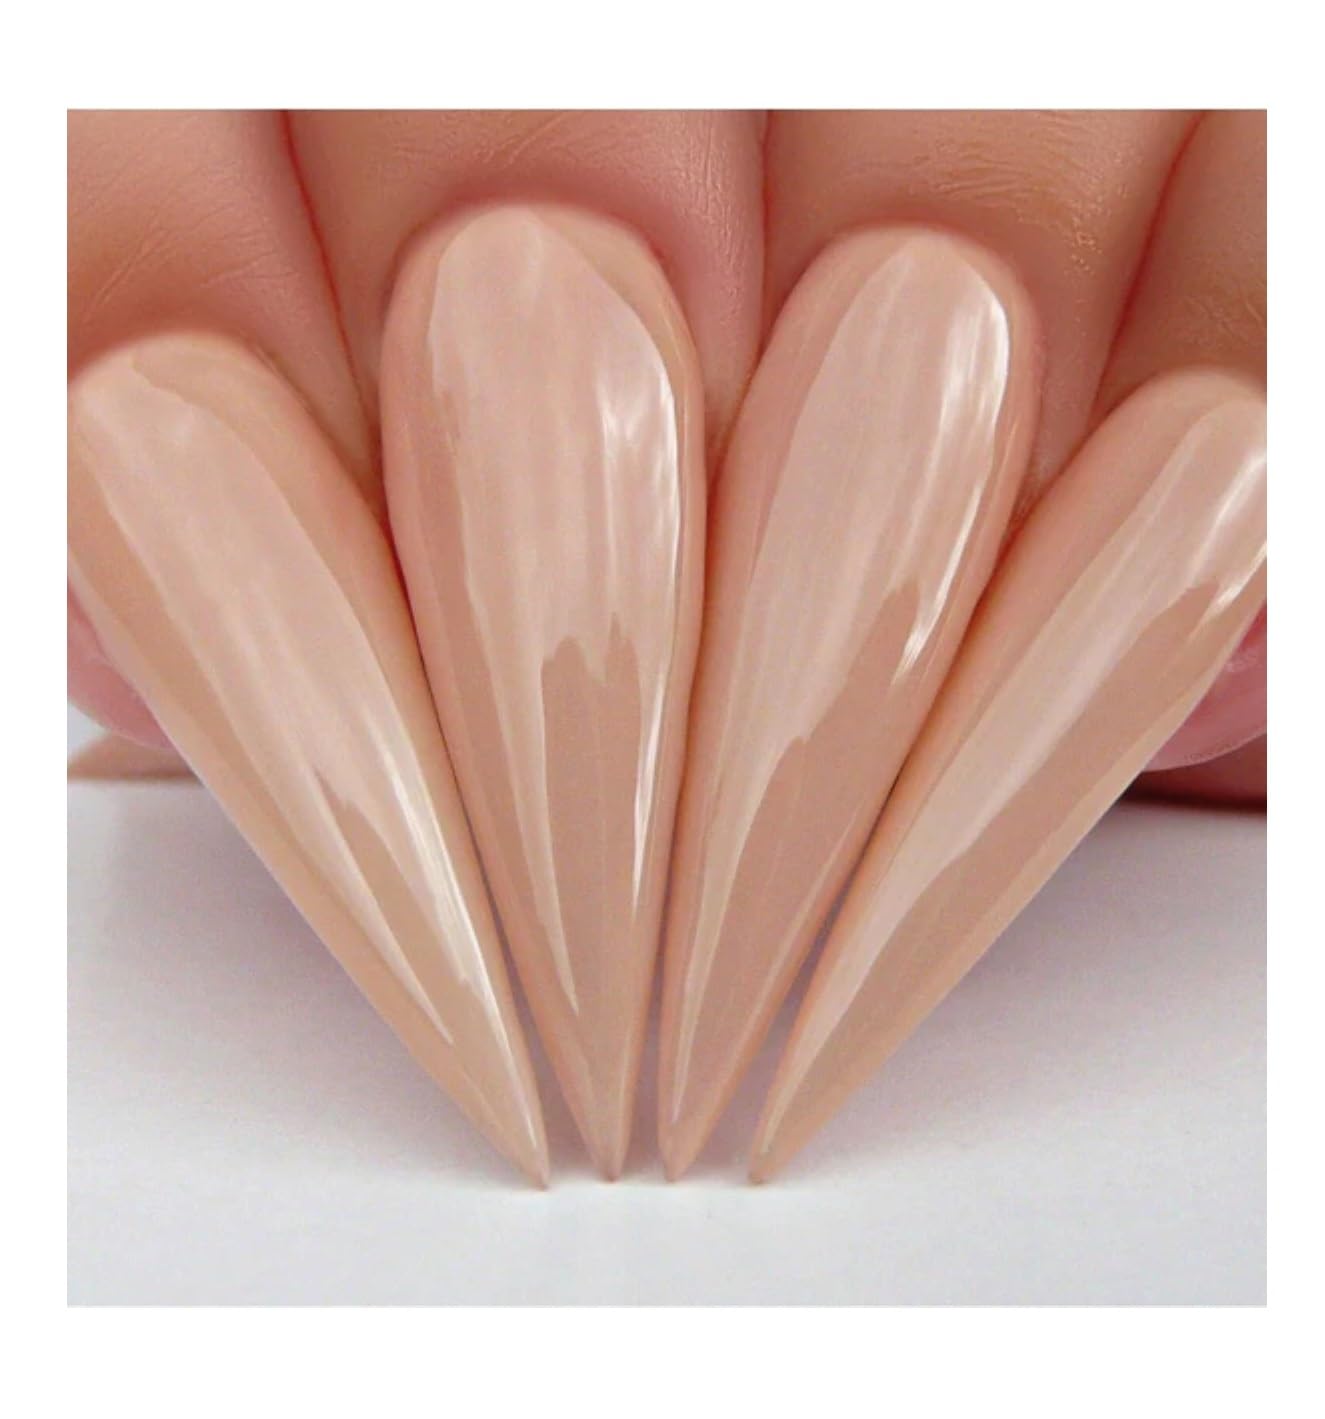 Kiara Sky Professional Nails Gel Polish Orange Tones fl oz (Silhouette)